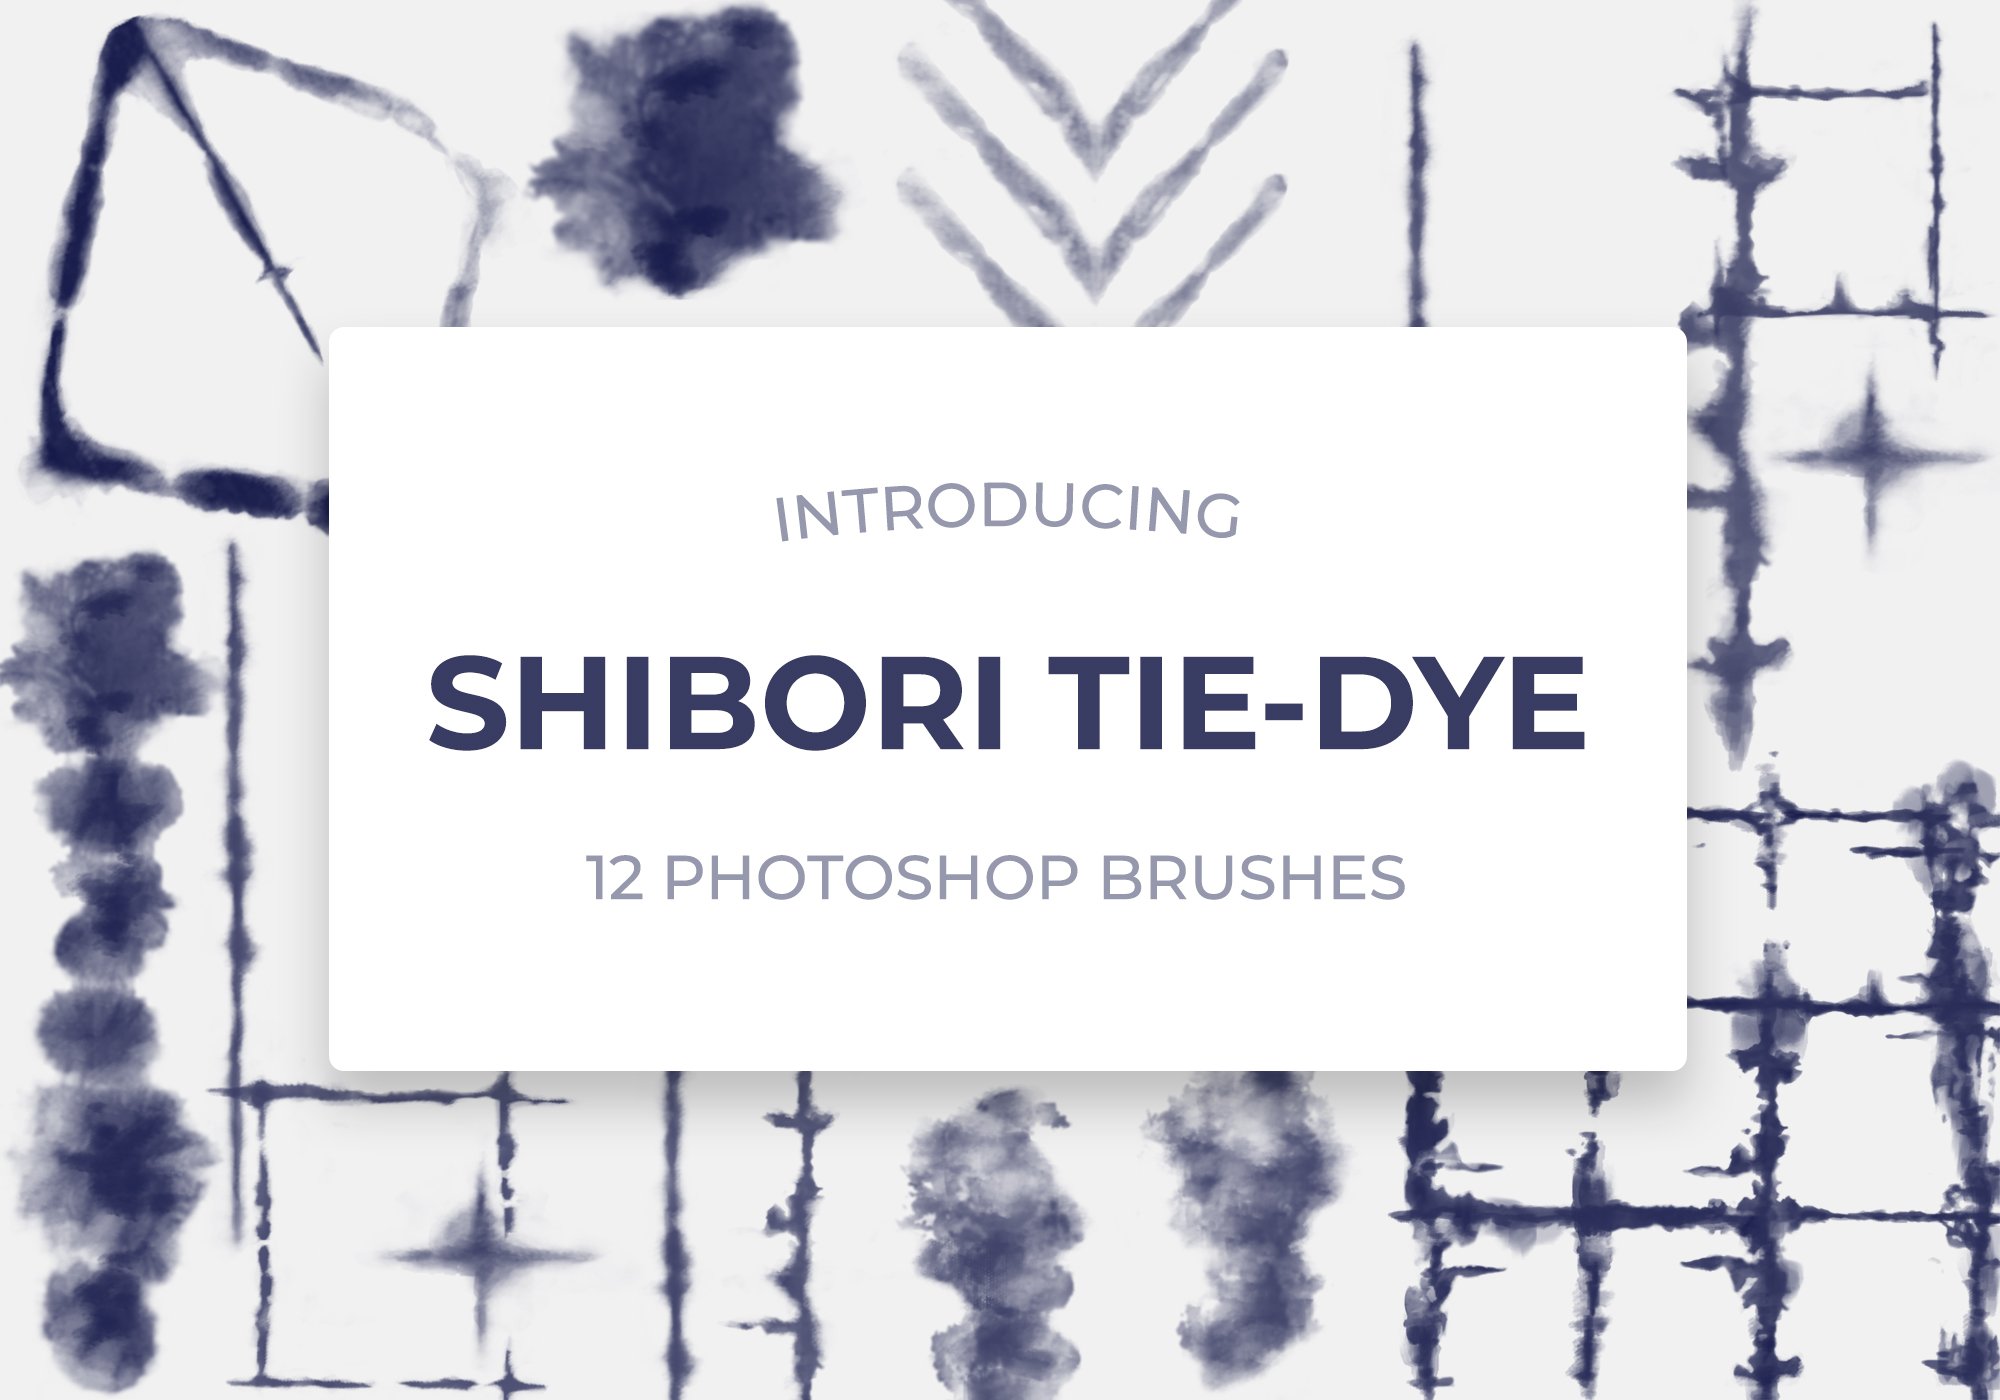 Shibori Digital Tie-Dye Brushes Vol1cover image.